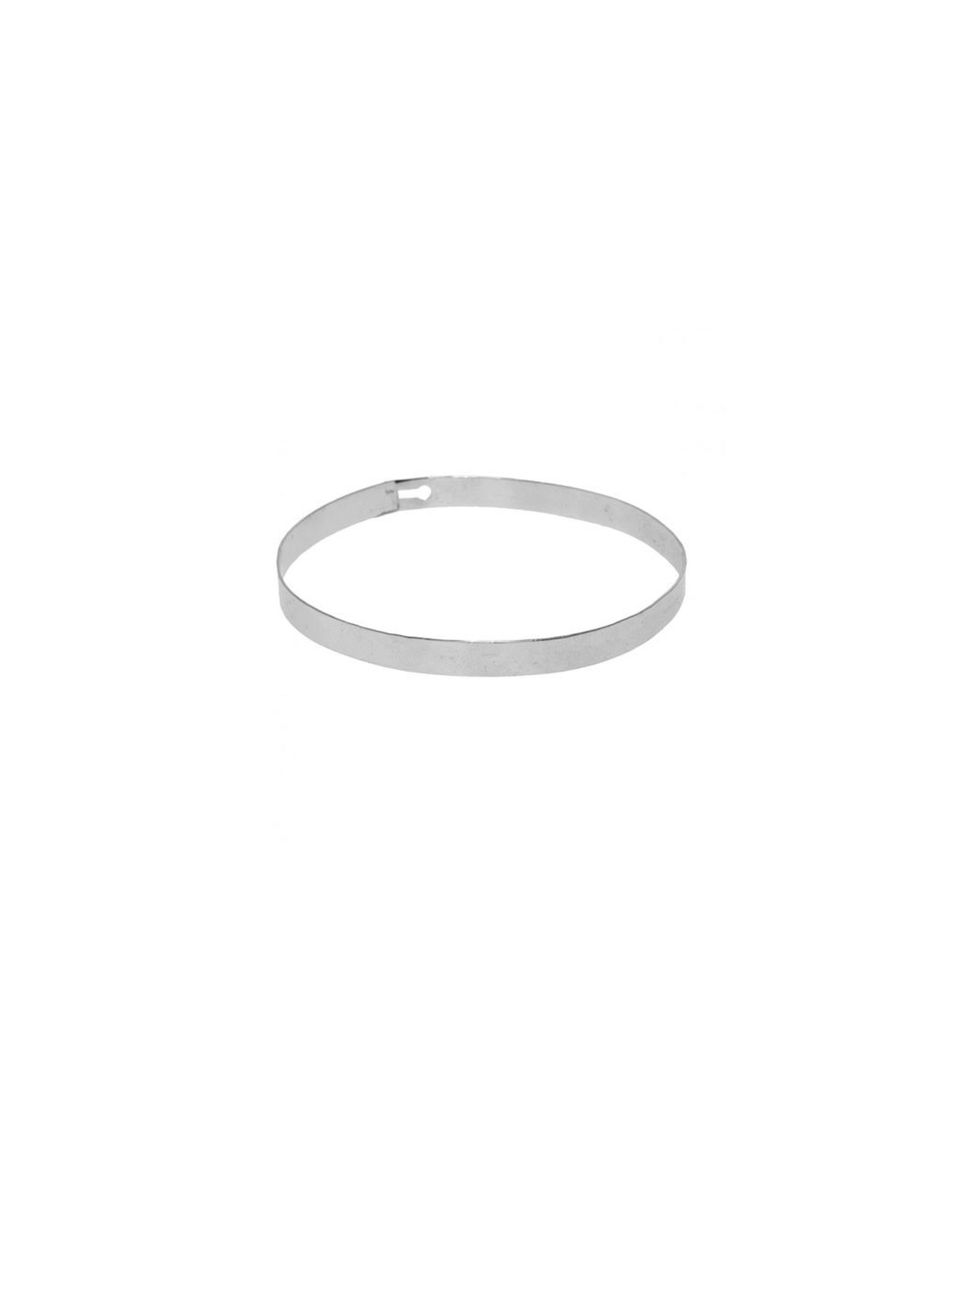 <p>Kismet white gold bracelet, £591, at <a href="http://www.kabiri.co.uk/designers/kismet/thin-white-gold-bracelet.html">Kabiri</a></p>